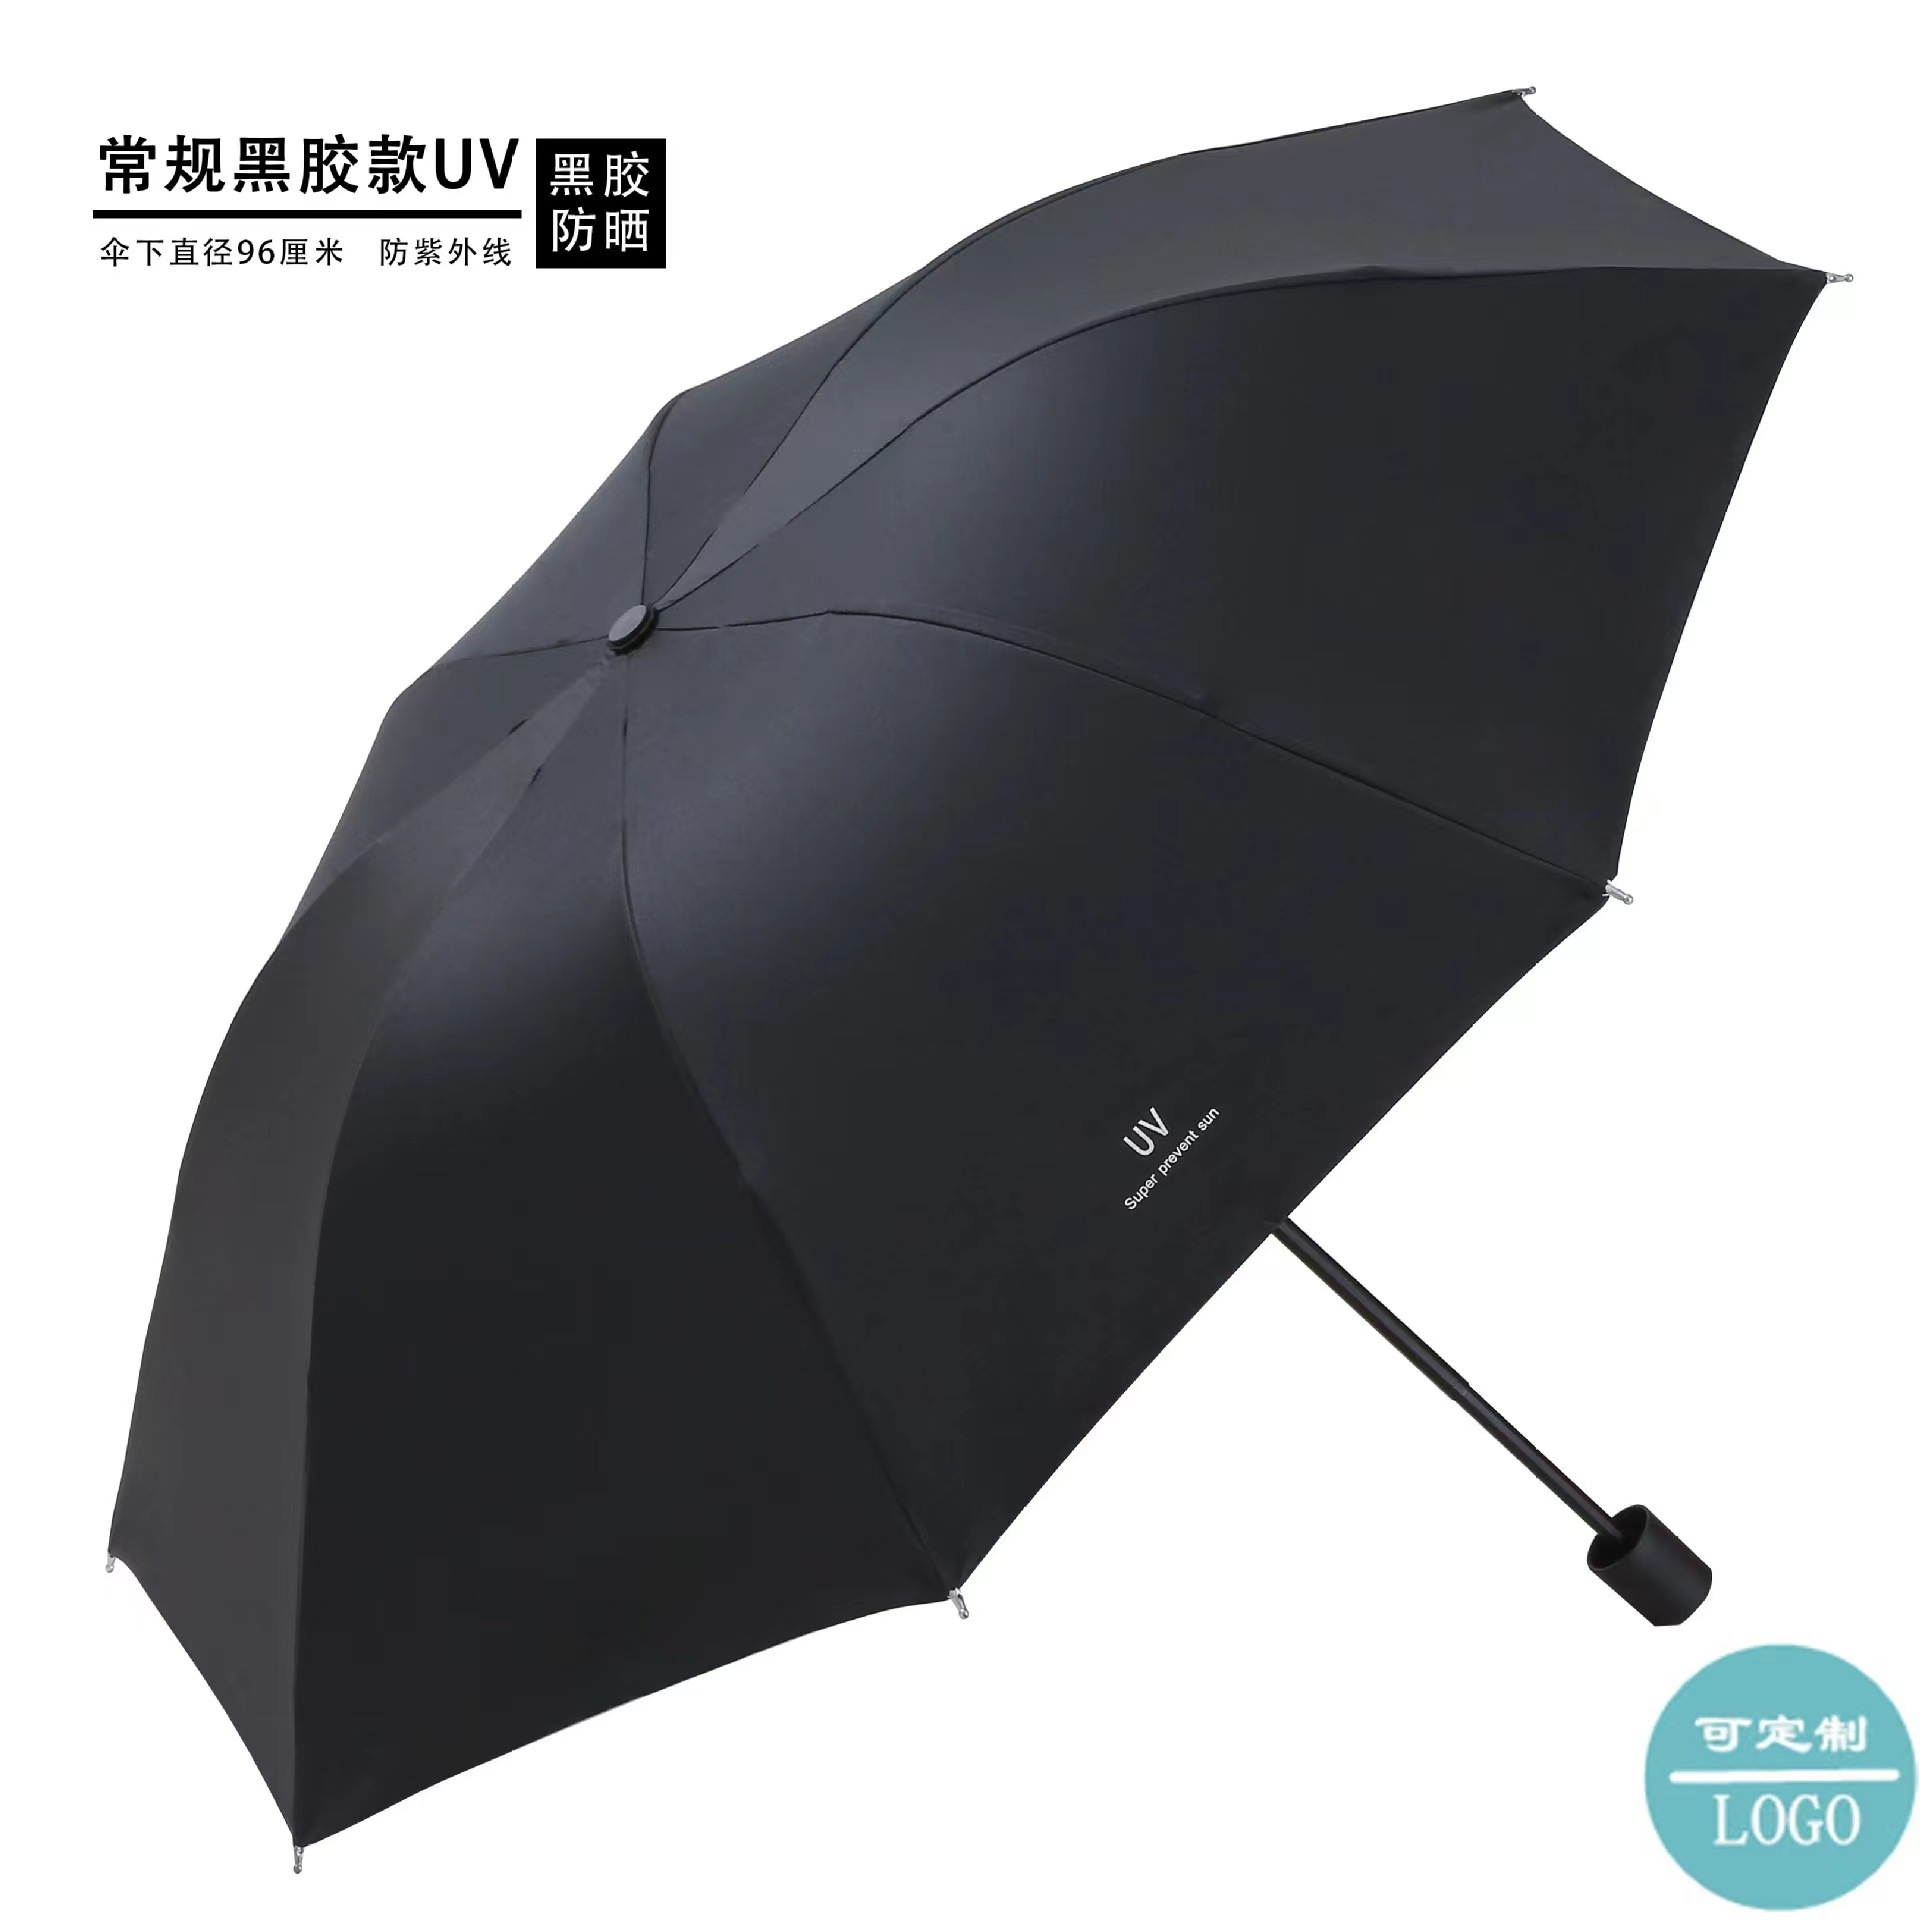 Full-Automatic Uv Vinyl Umbrella Triple Folding Umbrella Rain Dual-Use Sun Umbrella Sun Umbrella Gift Advertising Umbrella Printing Logo